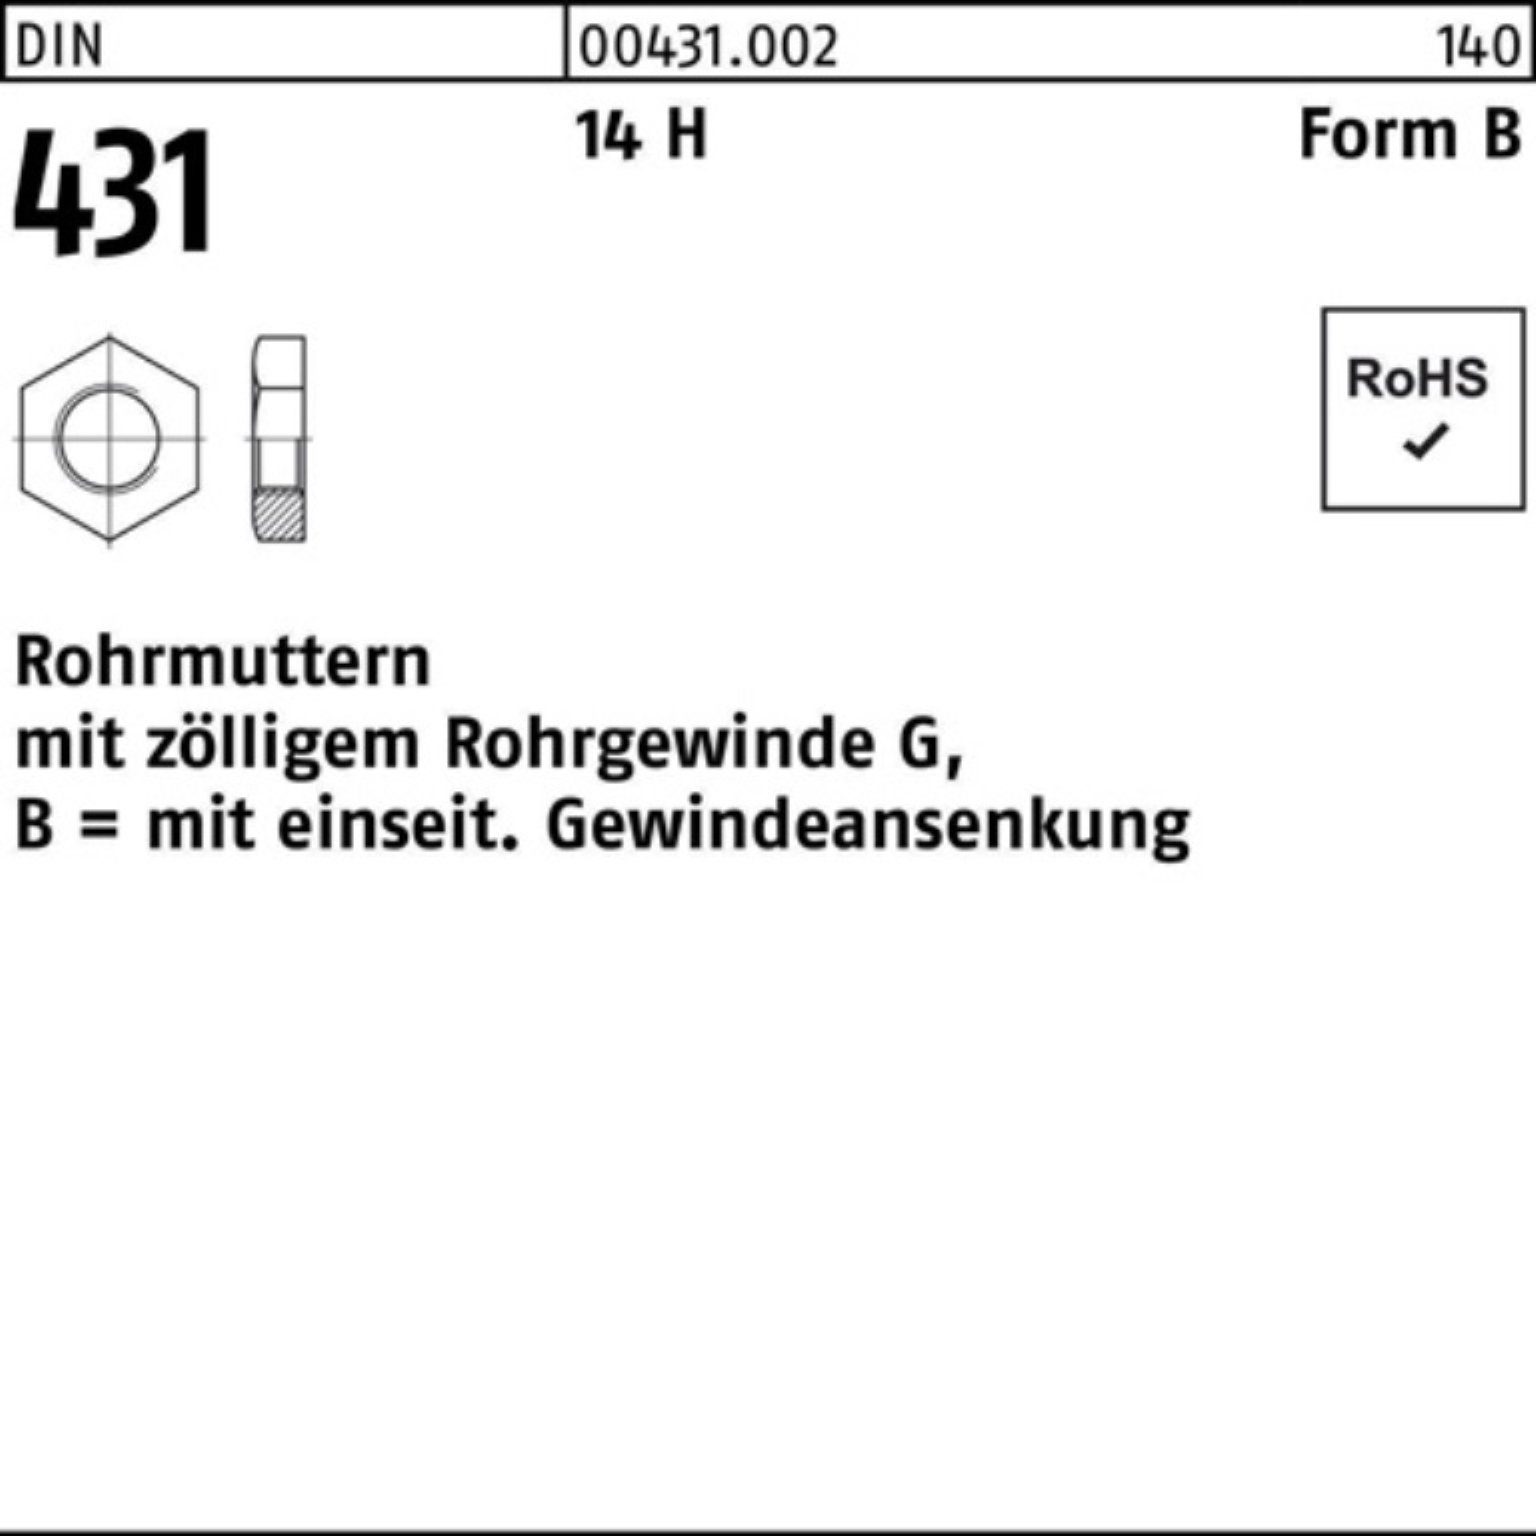 Reyher Rohrmutter 100er Pack Rohrmutter DIN 431 BG 1 1/4 14 H 1 Stück DIN 431 14 H Form